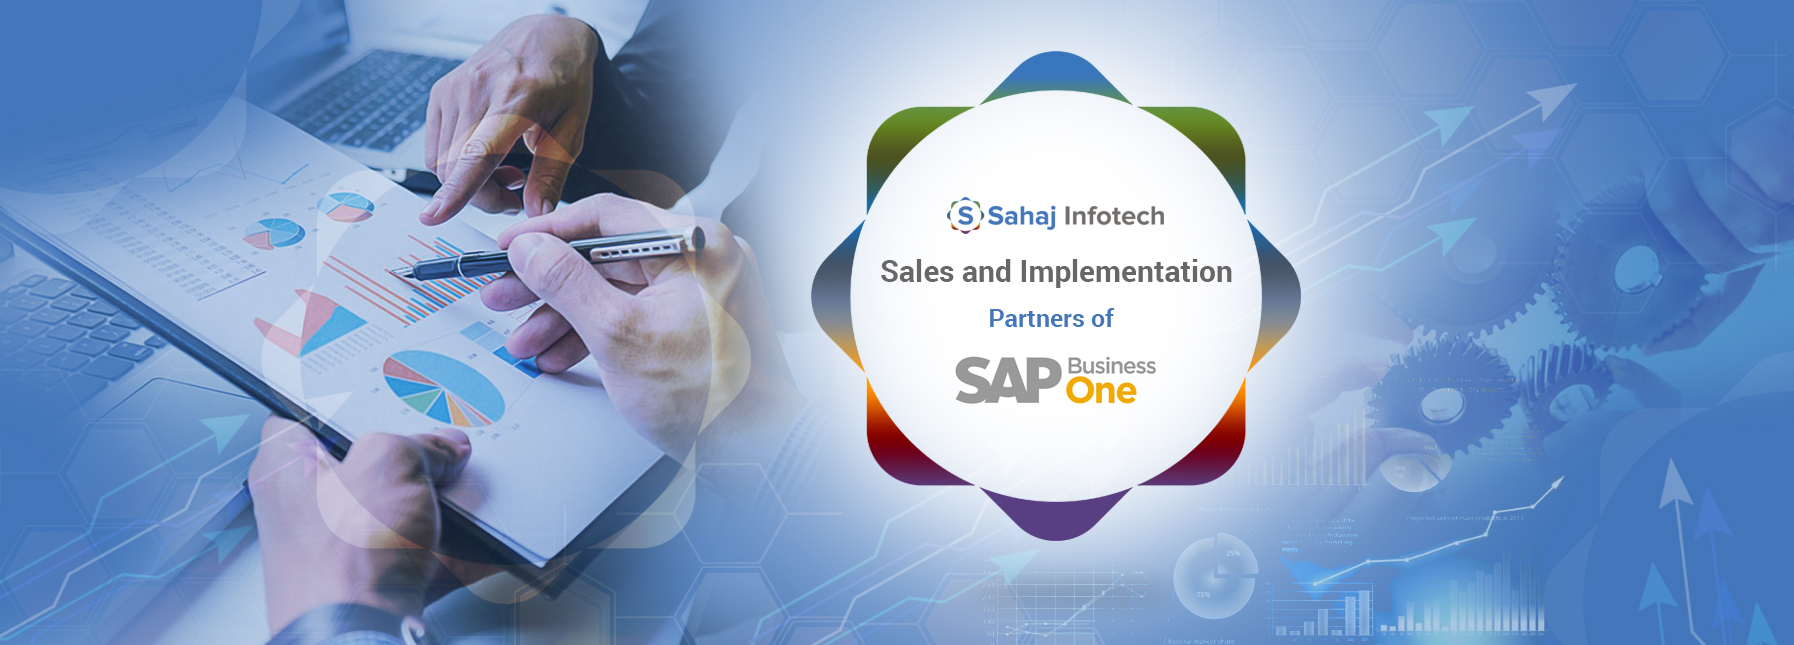 sahaj Infotech Sales and Implementation Sap